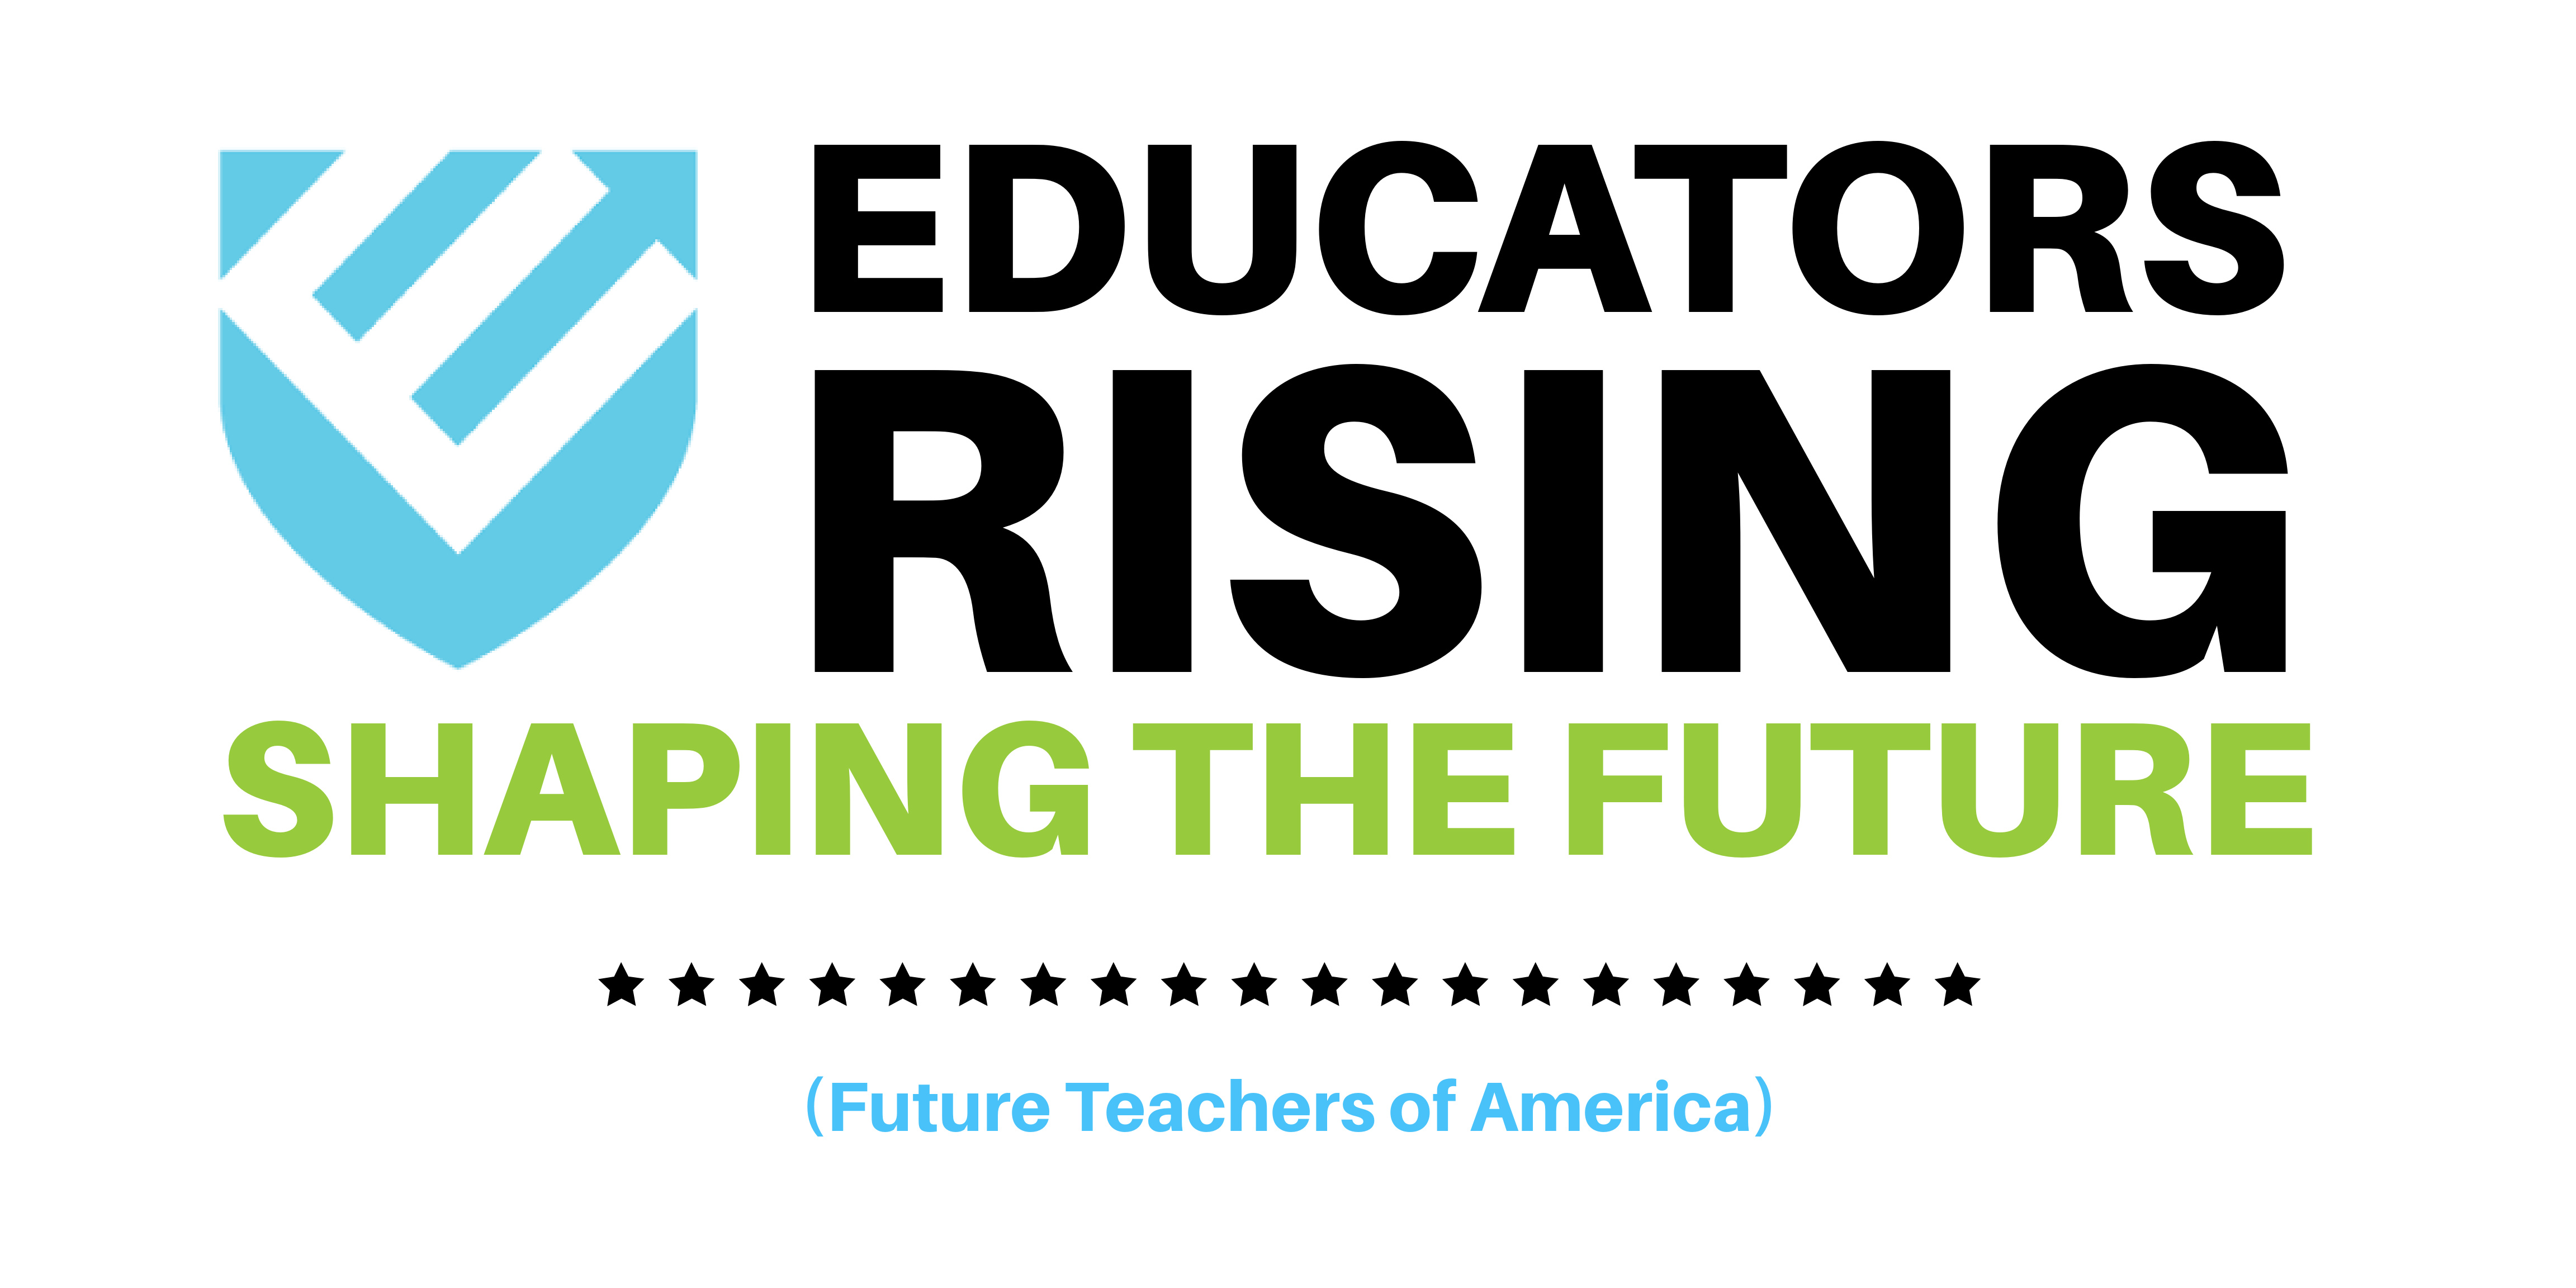 educators rising logo header image